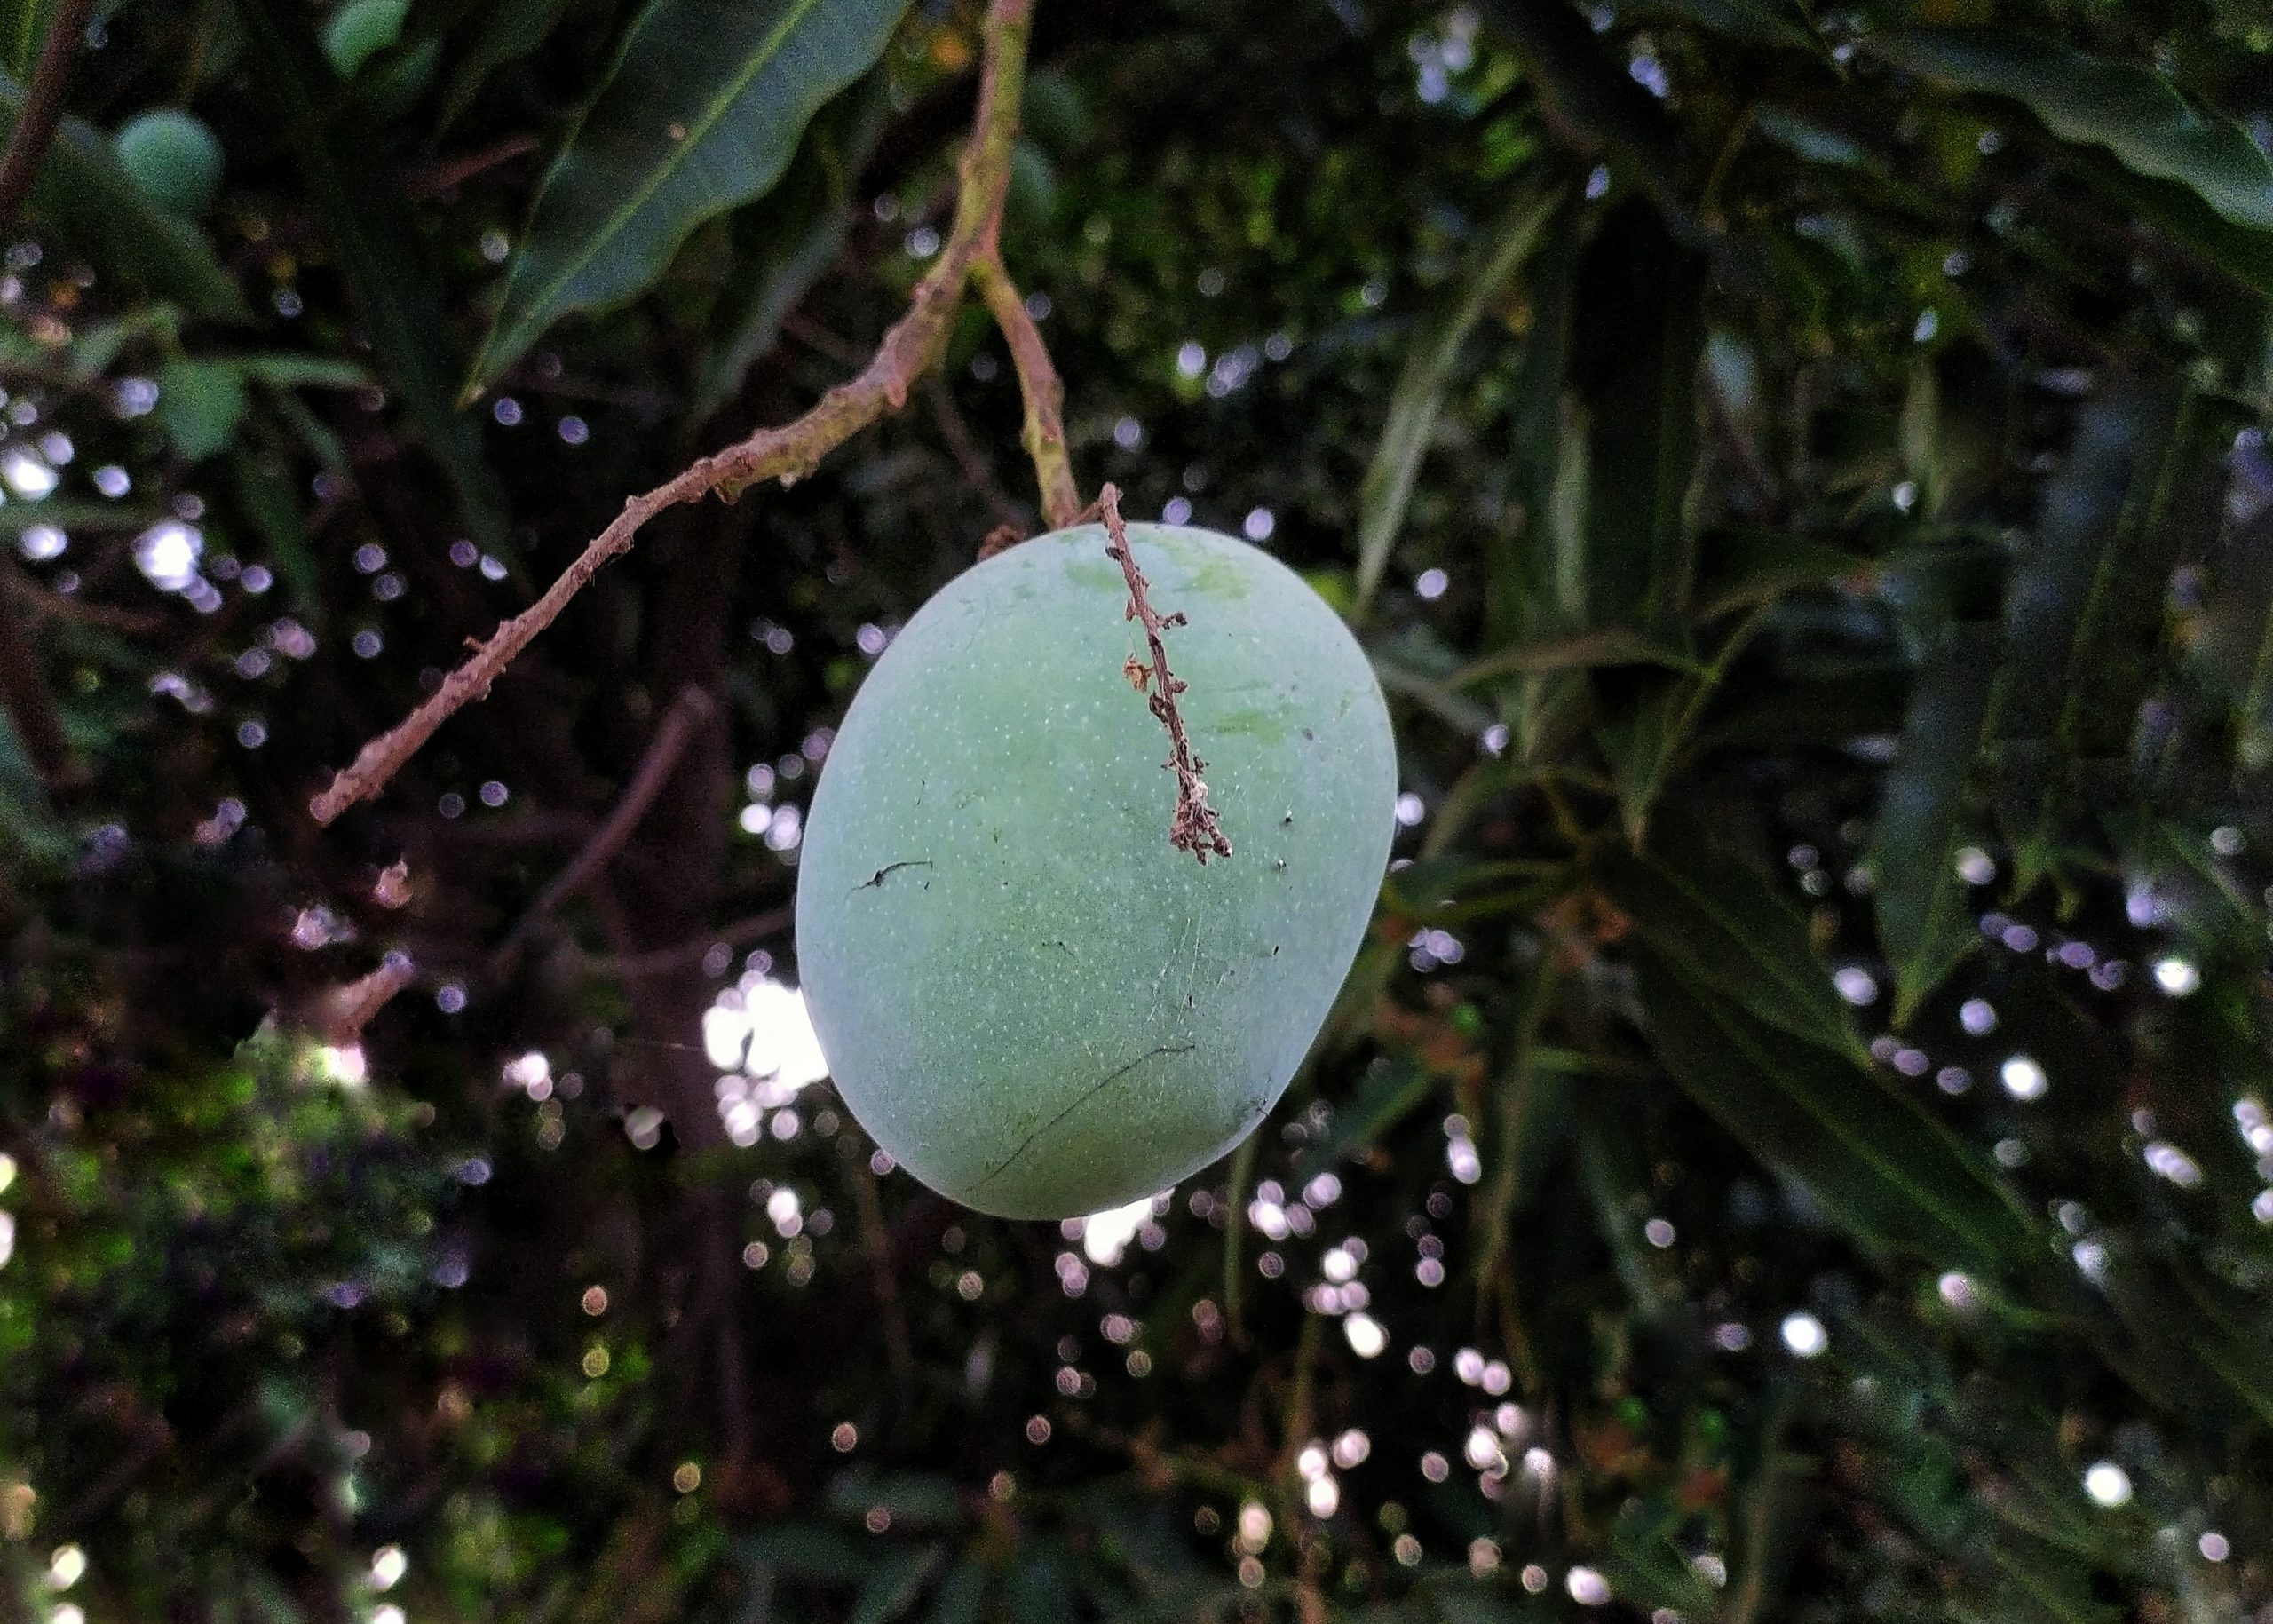 An unripe mango on its tree